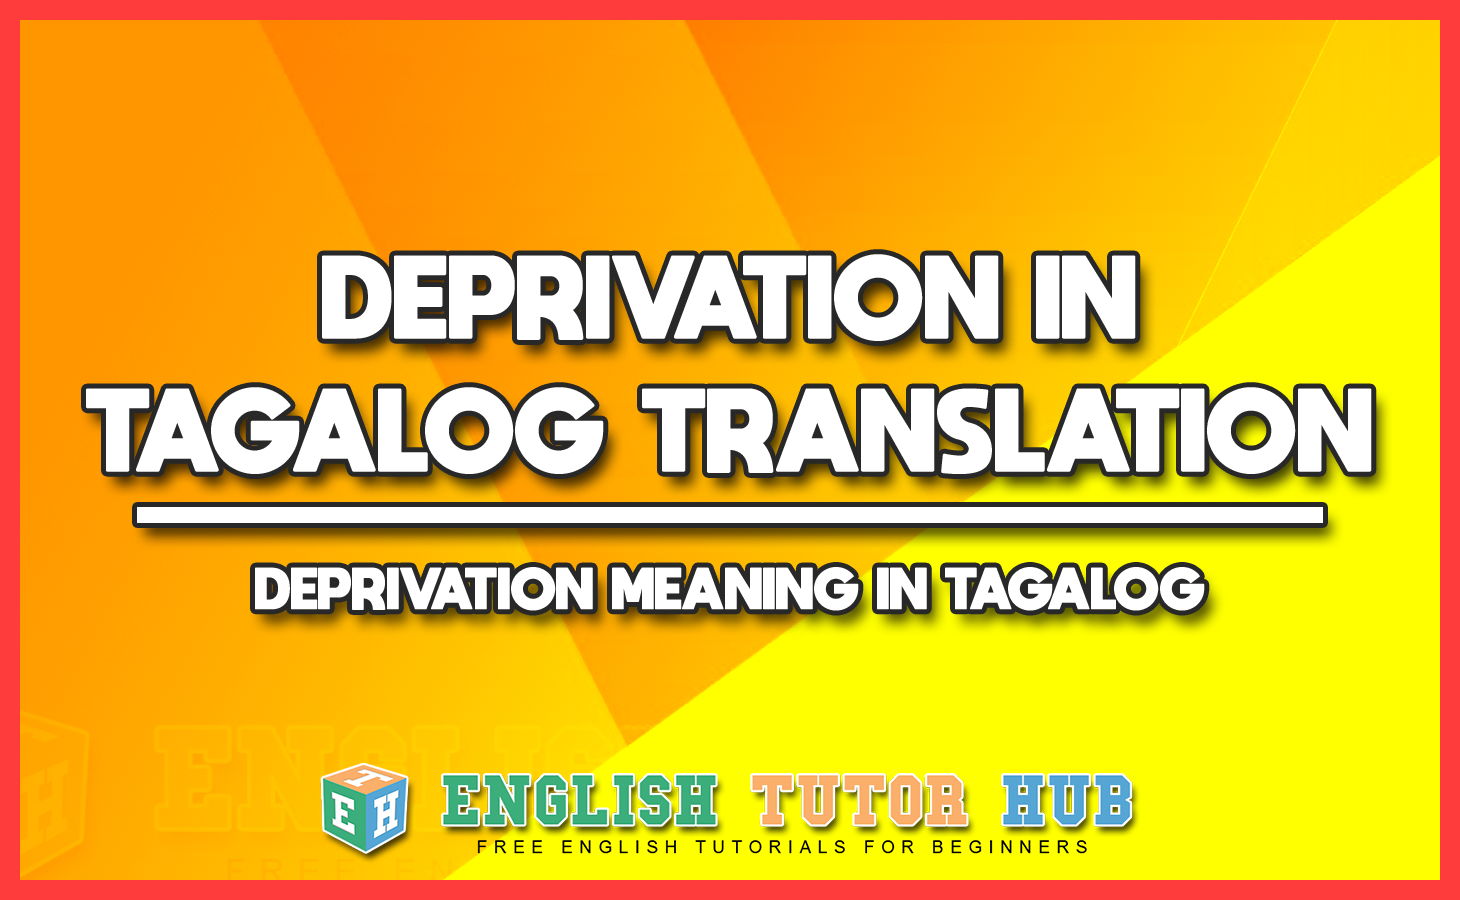 DEPRIVATION IN TAGALOG TRANSLATION - DEPRIVATION MEANING IN TAGALOG